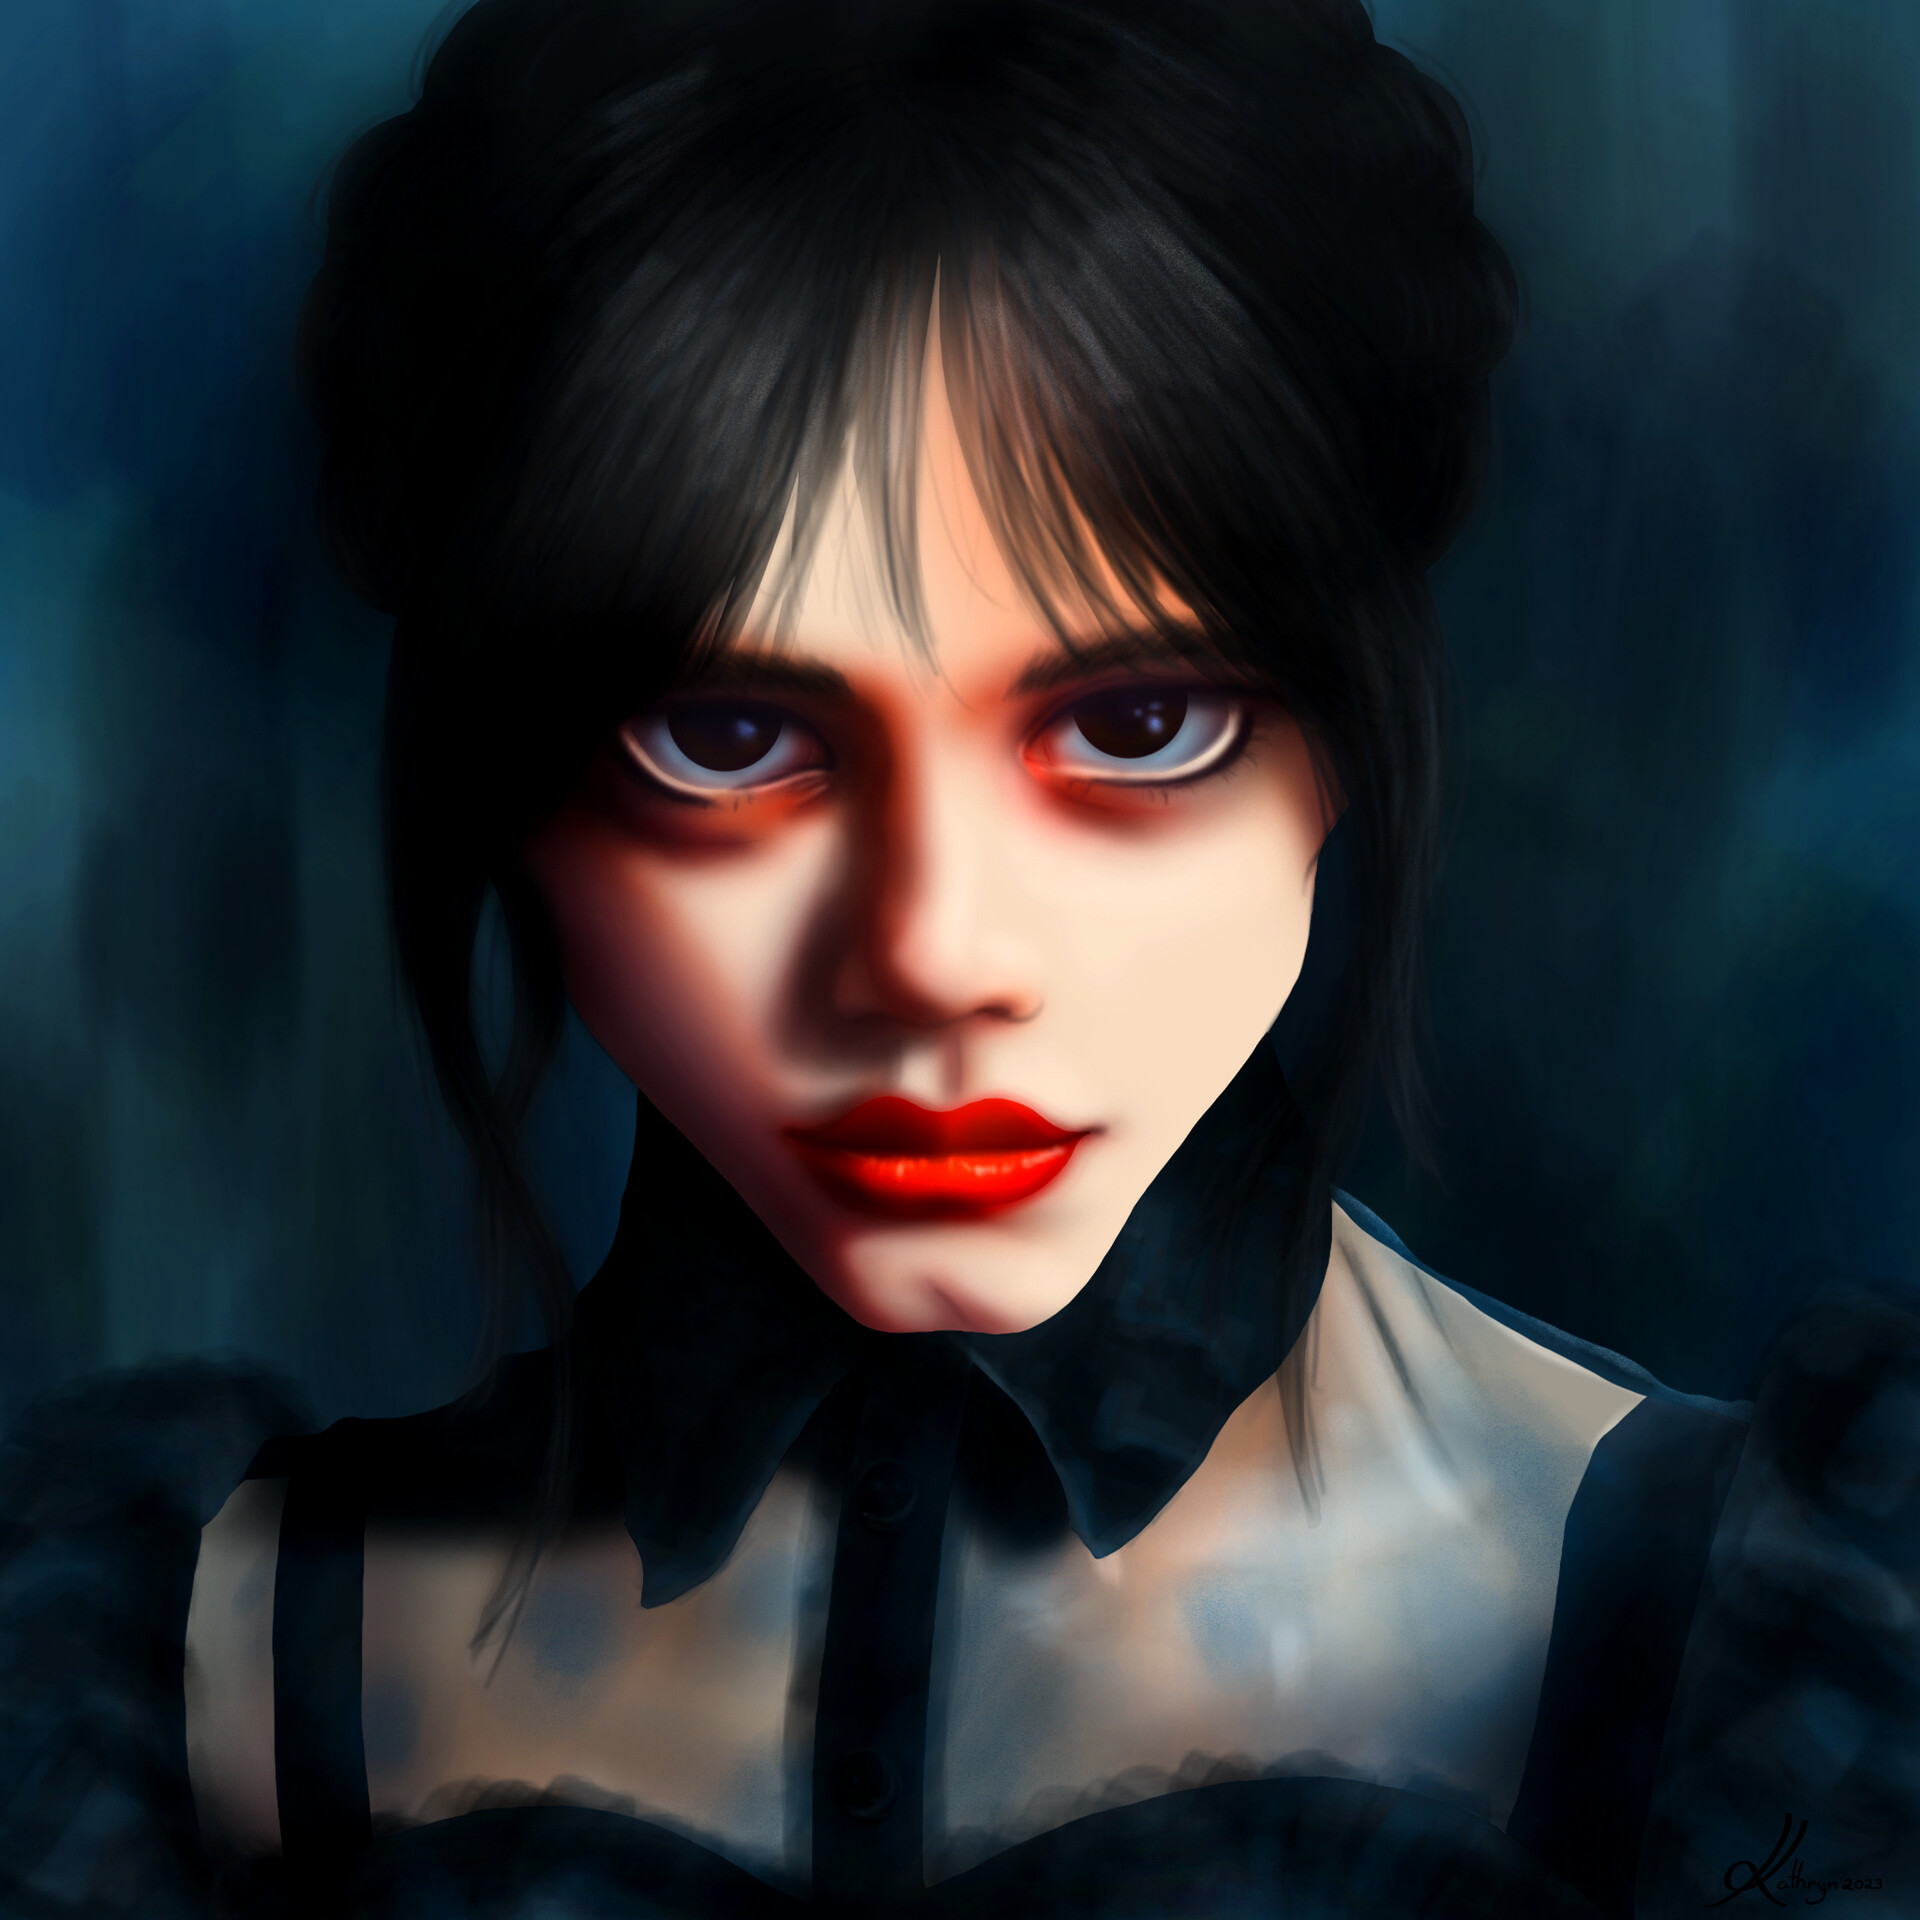 ArtStation - Wednesday Addams Portrait